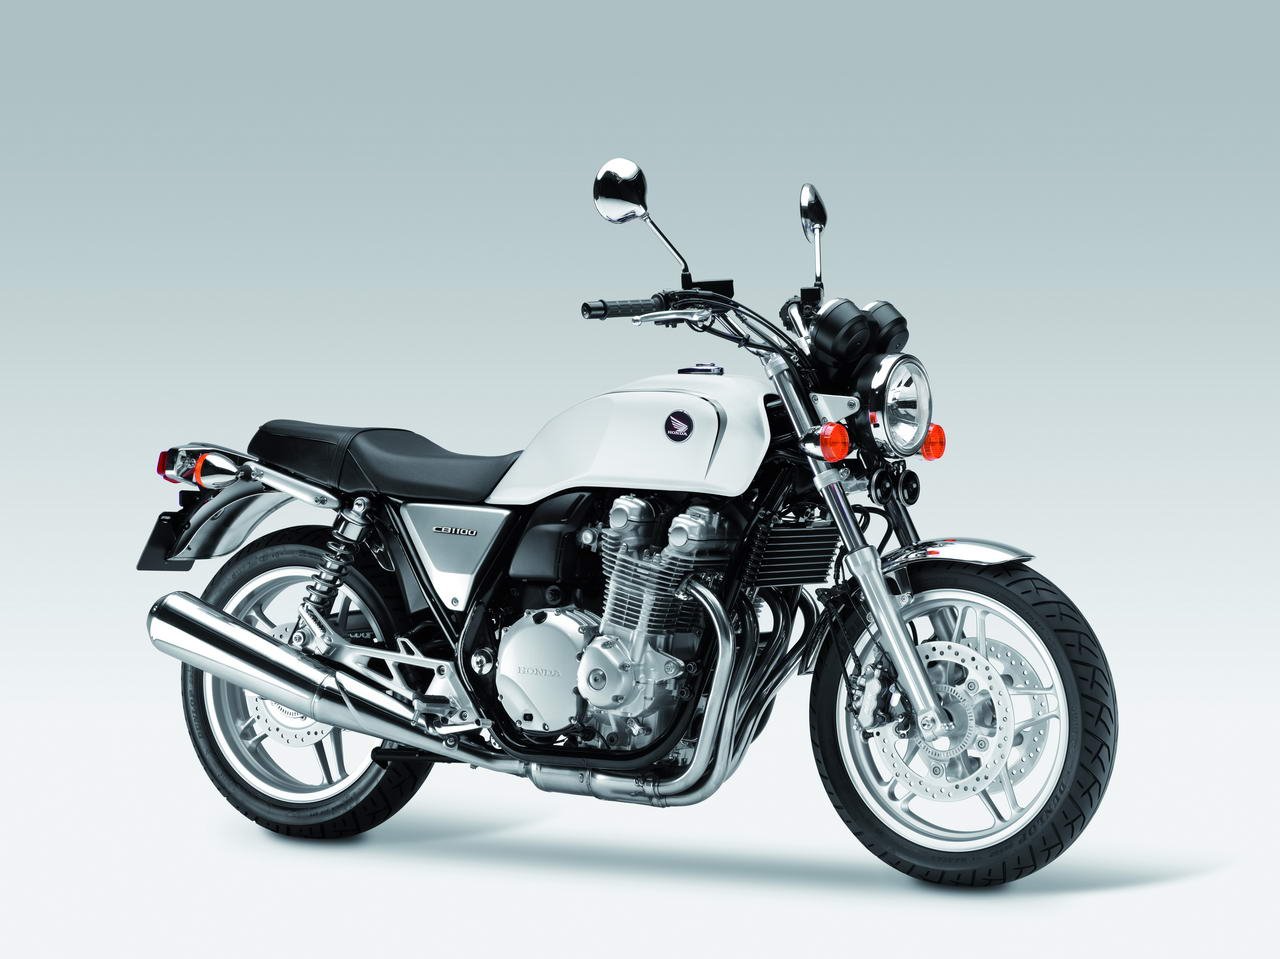 Listino Honda CB1100 ABS Maxi Naked - image 14645_honda-cb1100abs on https://moto.motori.net